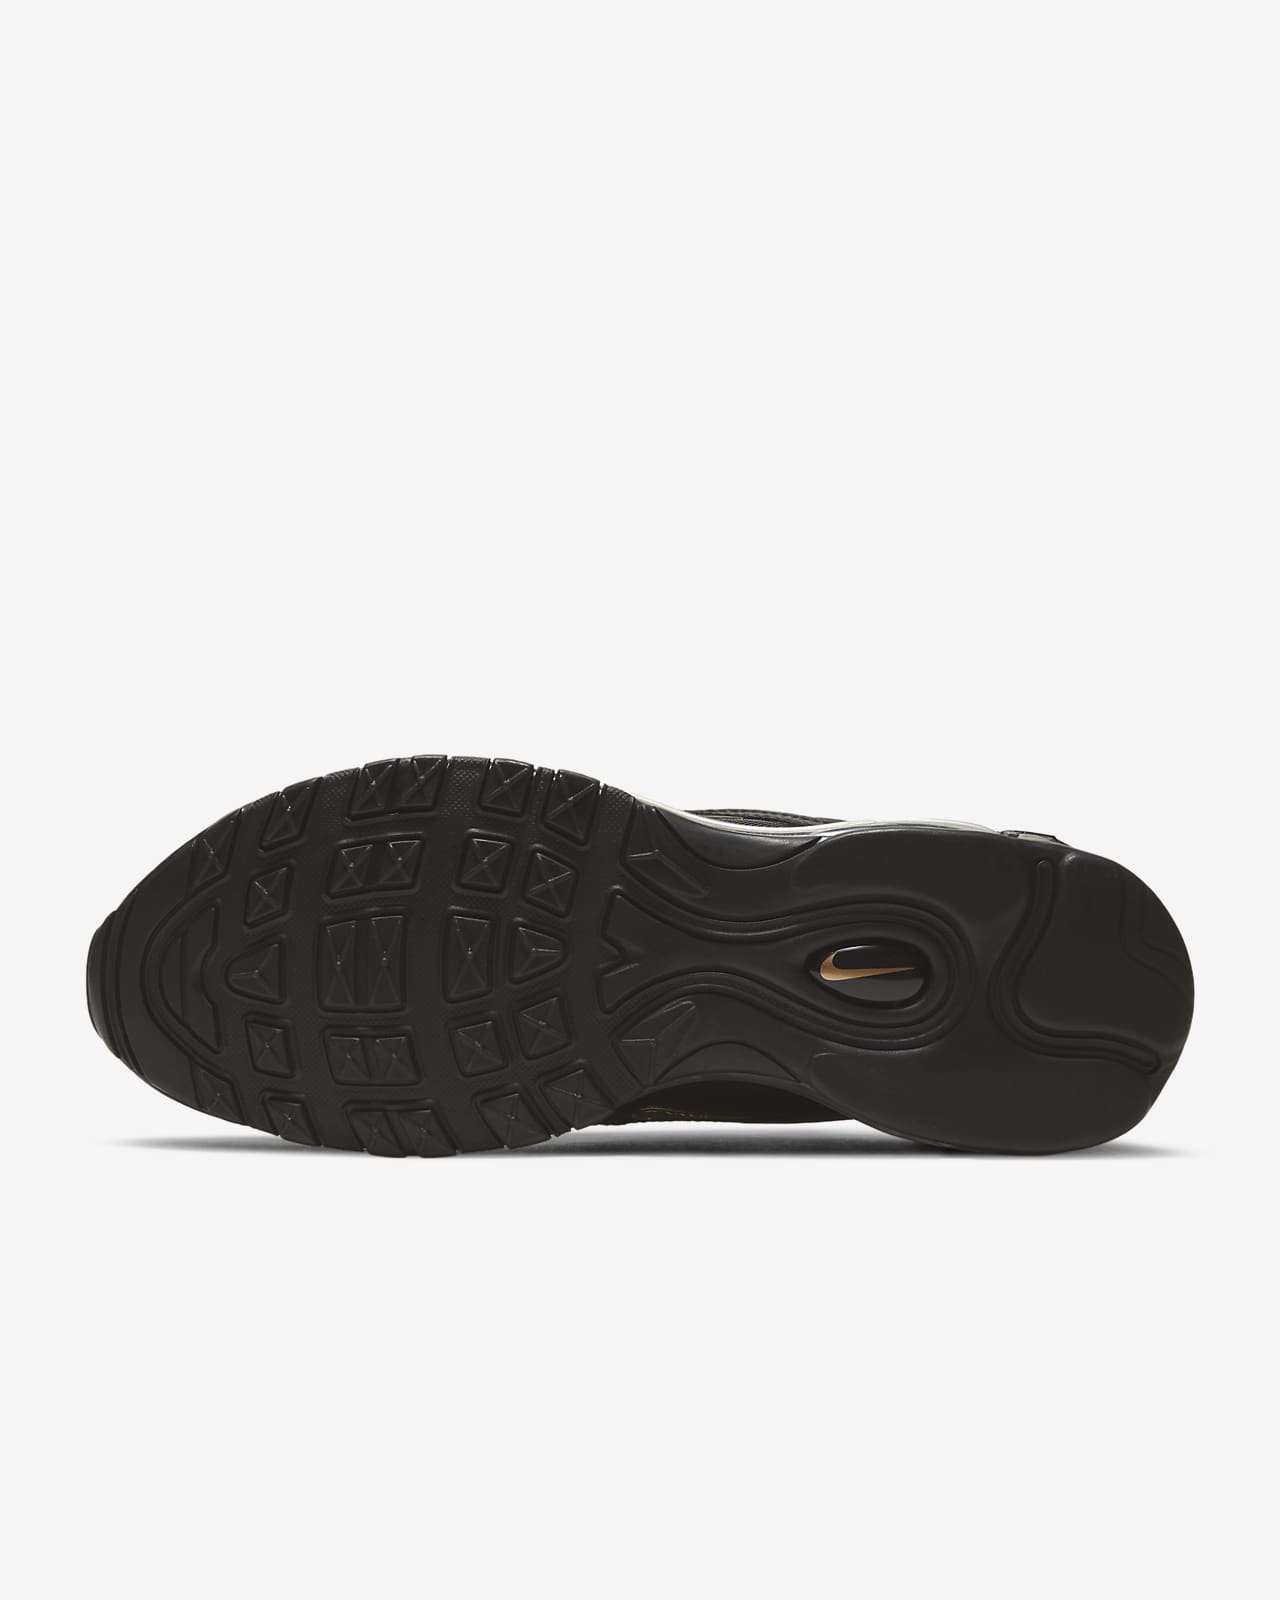 Nike Air Max 97 - Black - Mens - Trainers - Size: 7.5